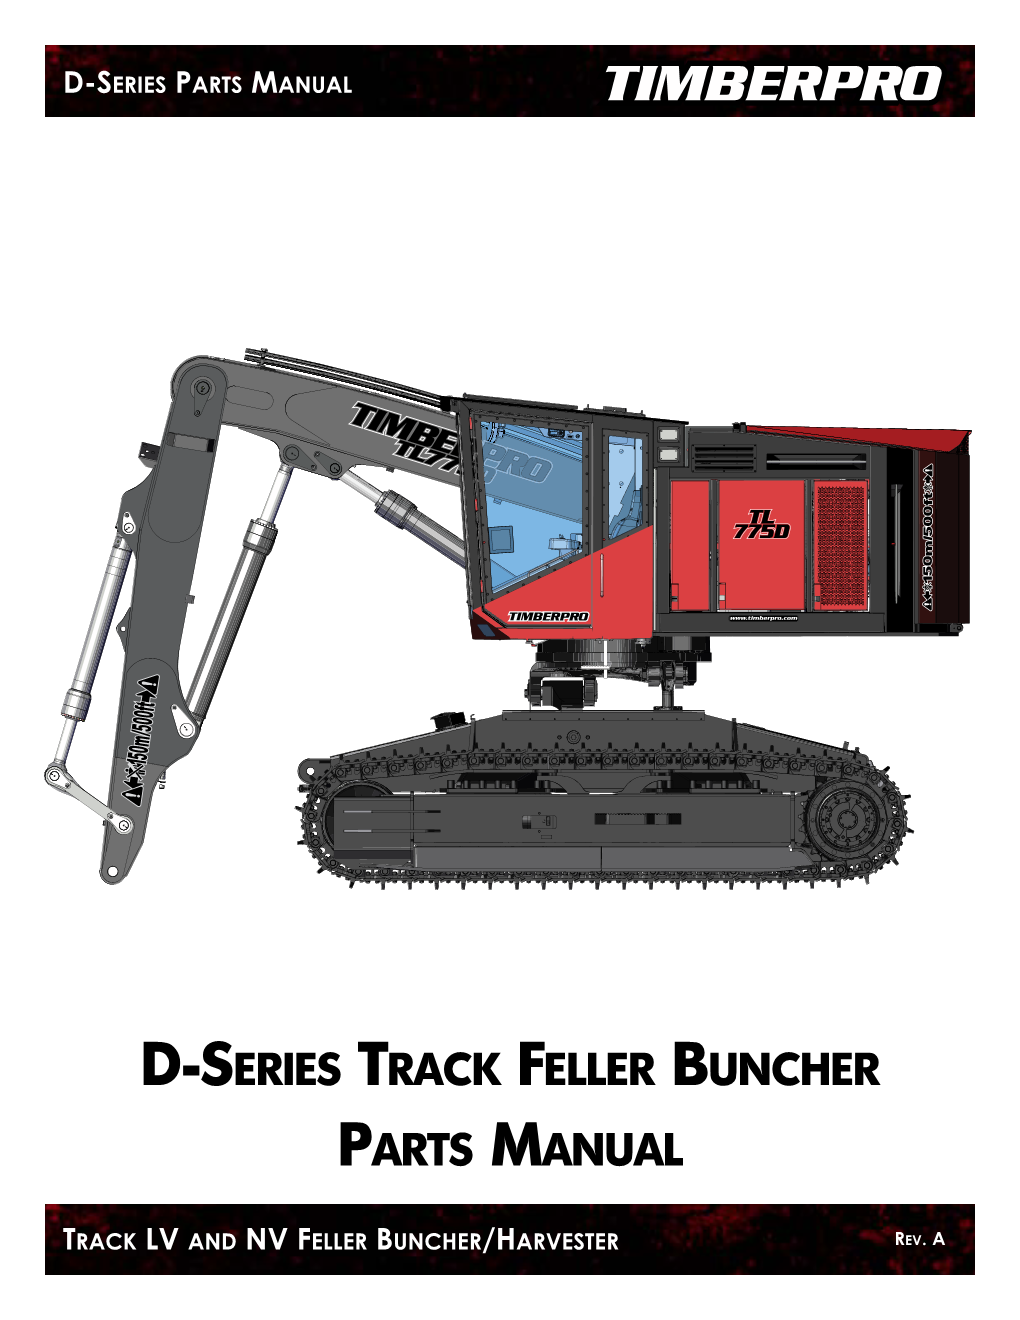 D-Series Track Feller Buncher Parts Manual